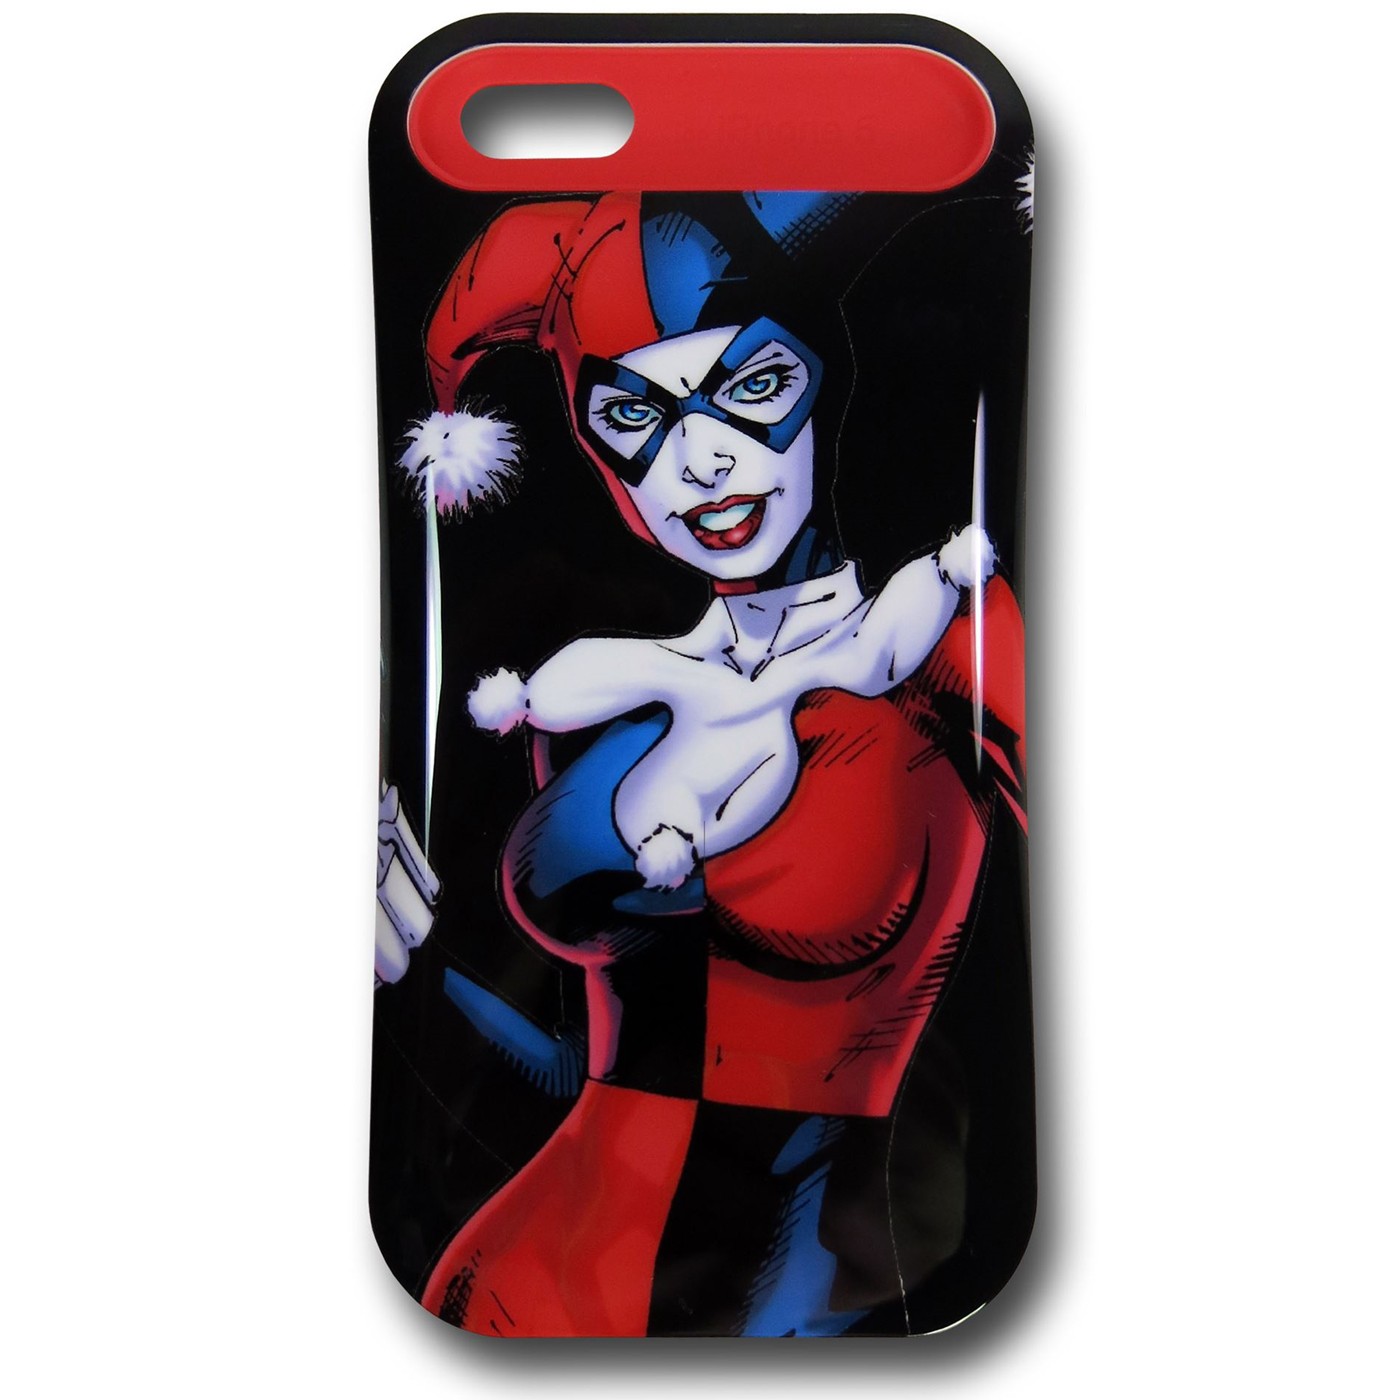 Harley Quinn iPhone 5 Case